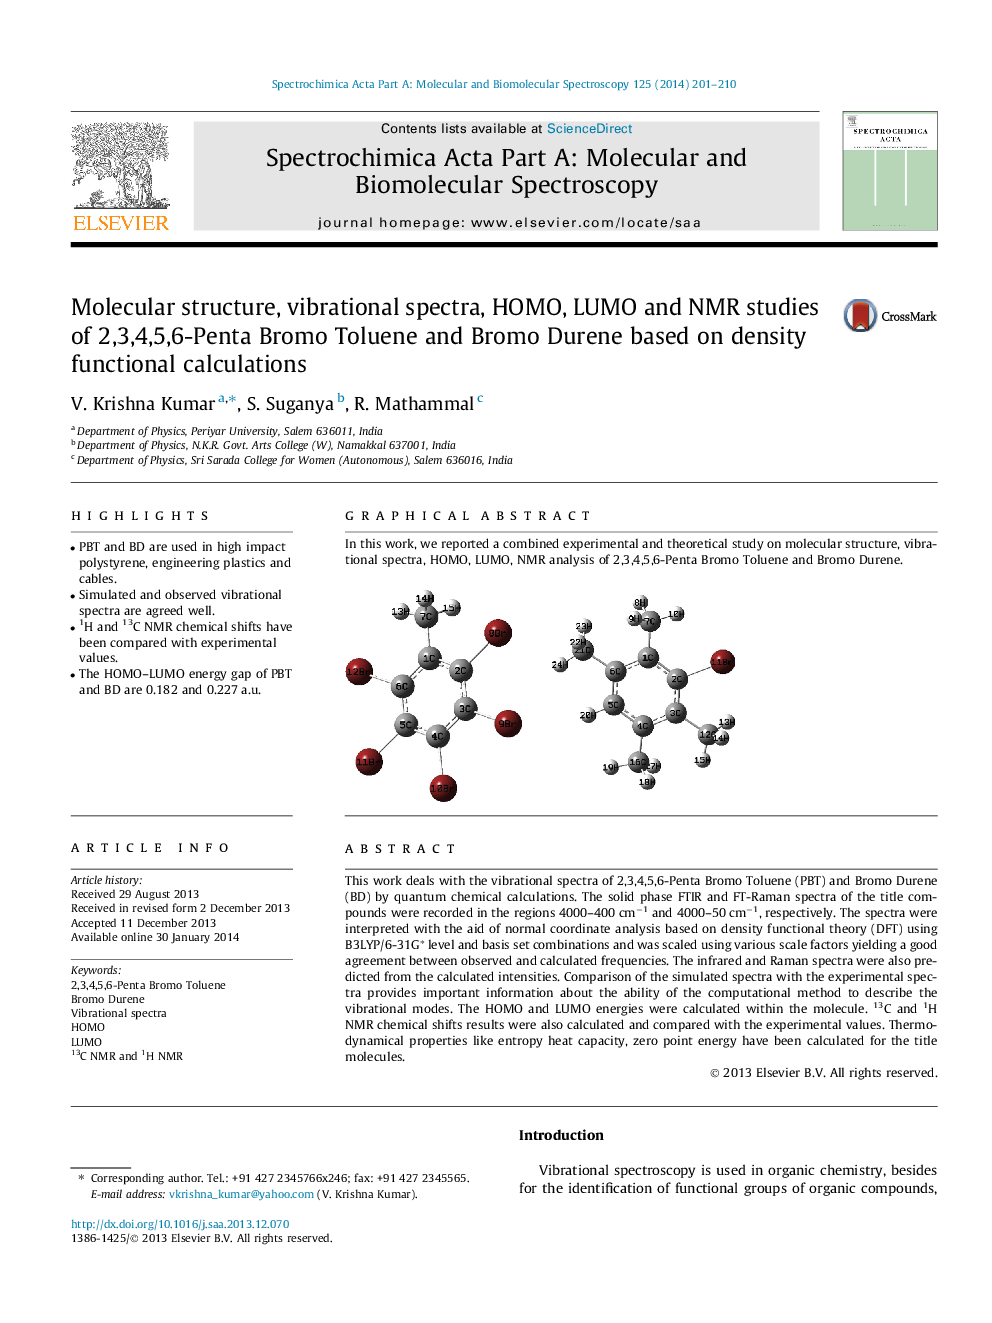 Molecular structure, vibrational spectra, HOMO, LUMO and NMR studies of 2,3,4,5,6-Penta Bromo Toluene and Bromo Durene based on density functional calculations